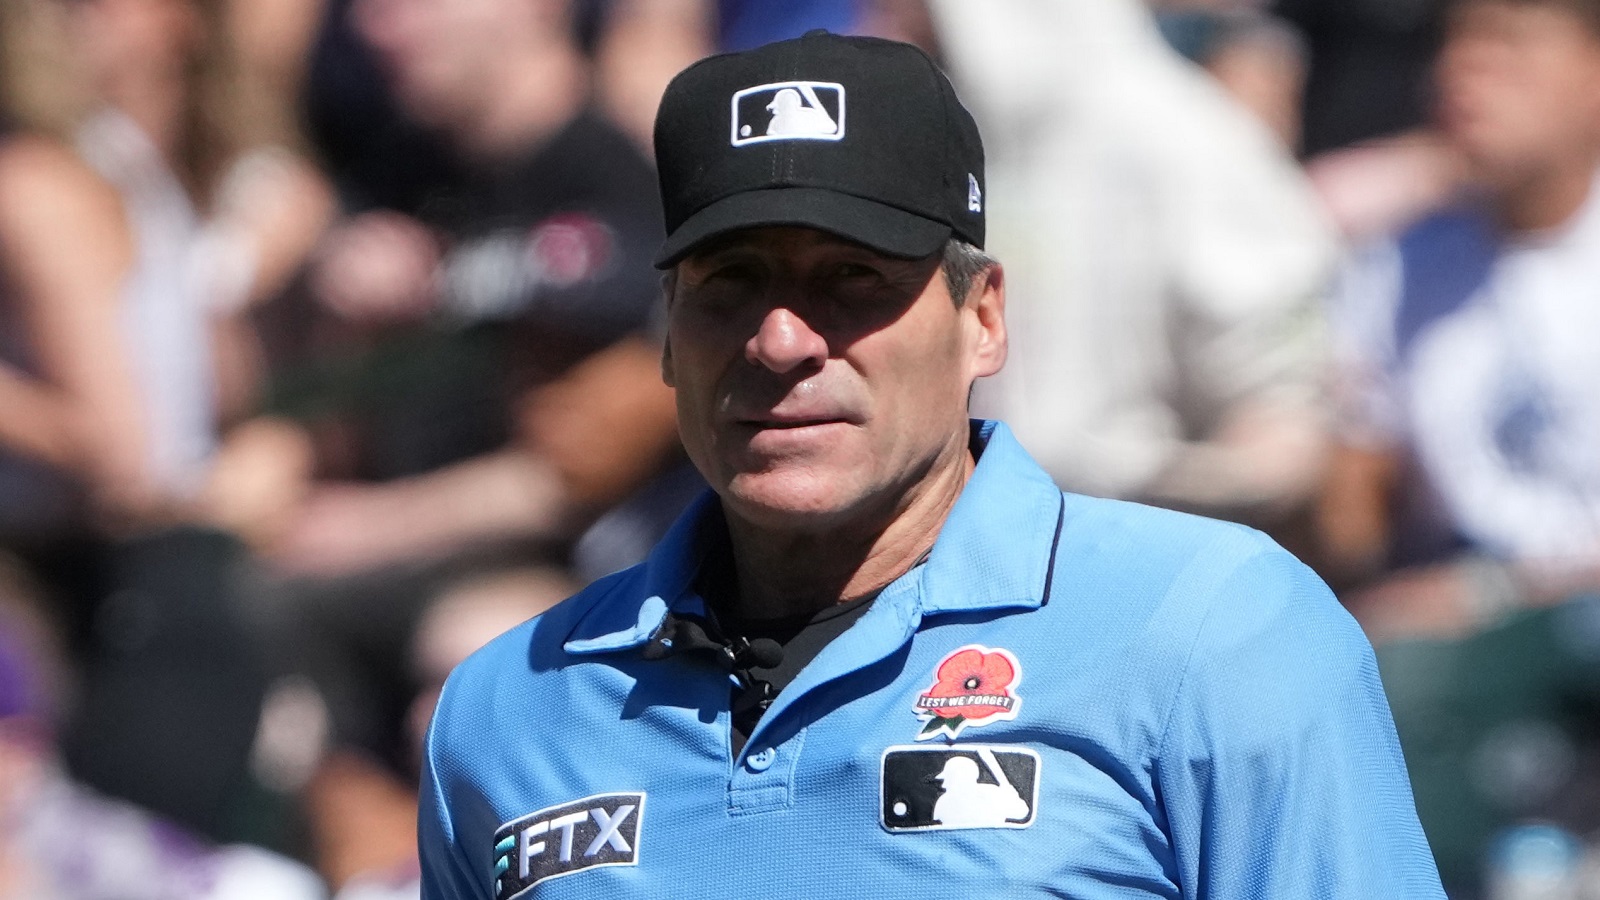 Umpire Angel Hernandez sues MLB for racial discrimination, cites